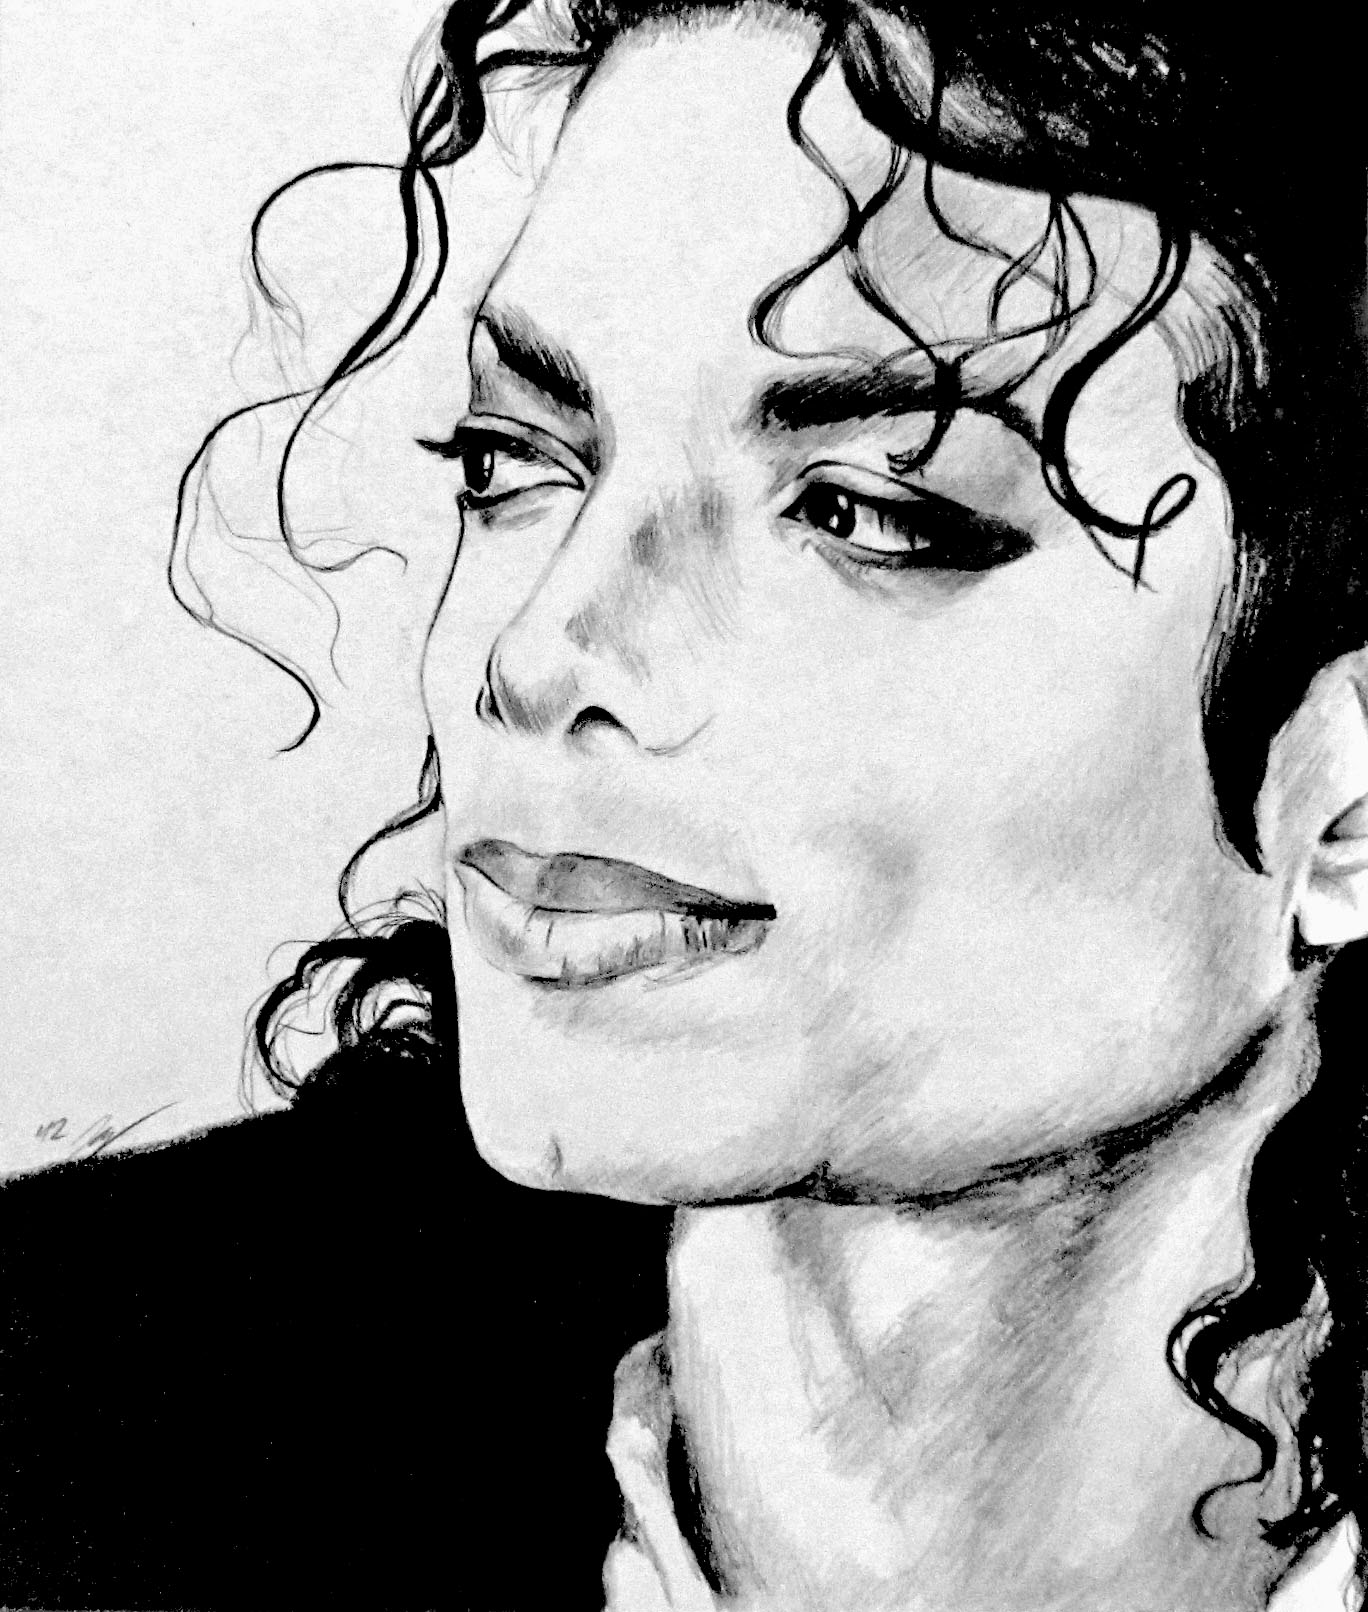 Animal Michael Jackson Sketch Drawing for Adult